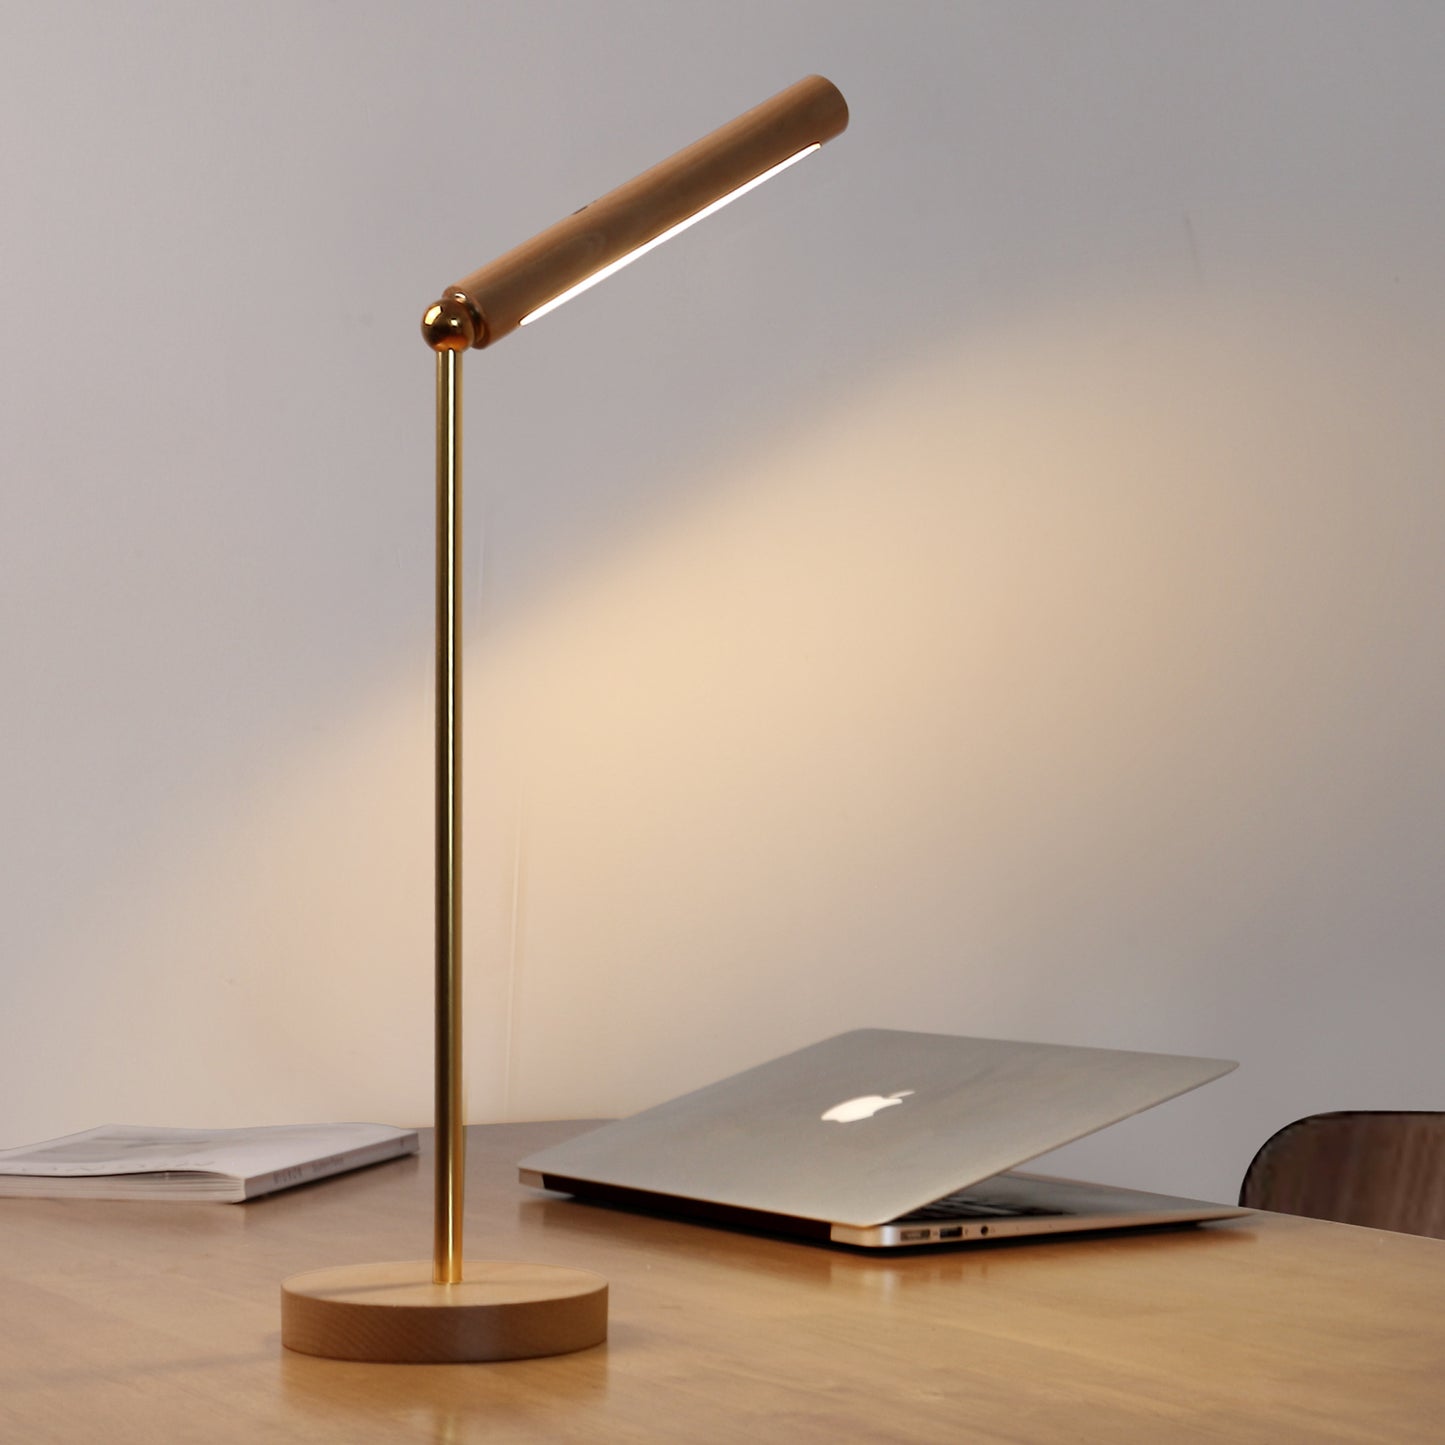 Minimalist Wooden Desk Lamp